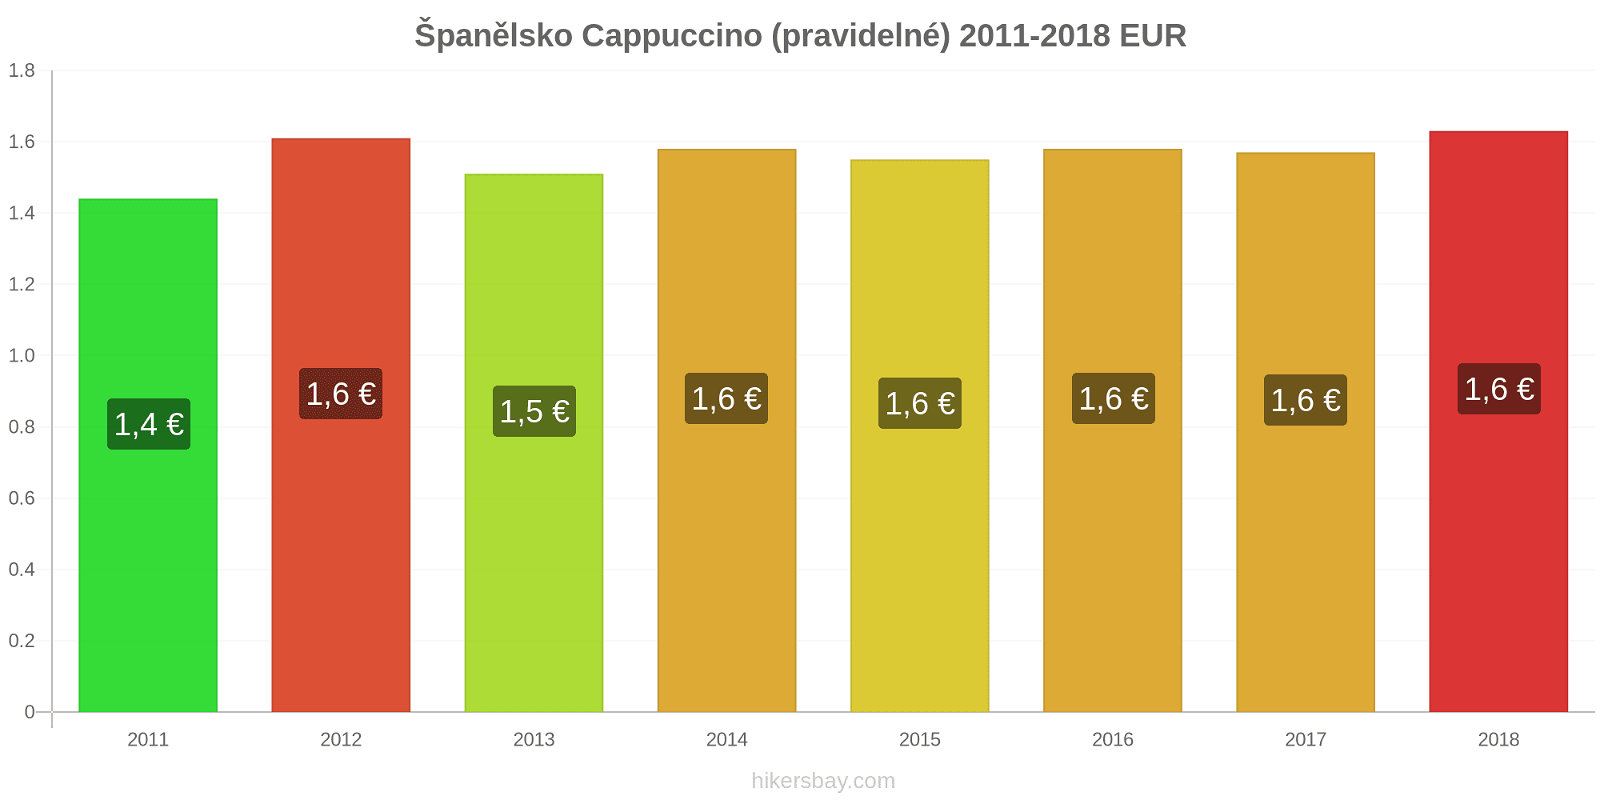 Španělsko změny cen Cappuccino hikersbay.com